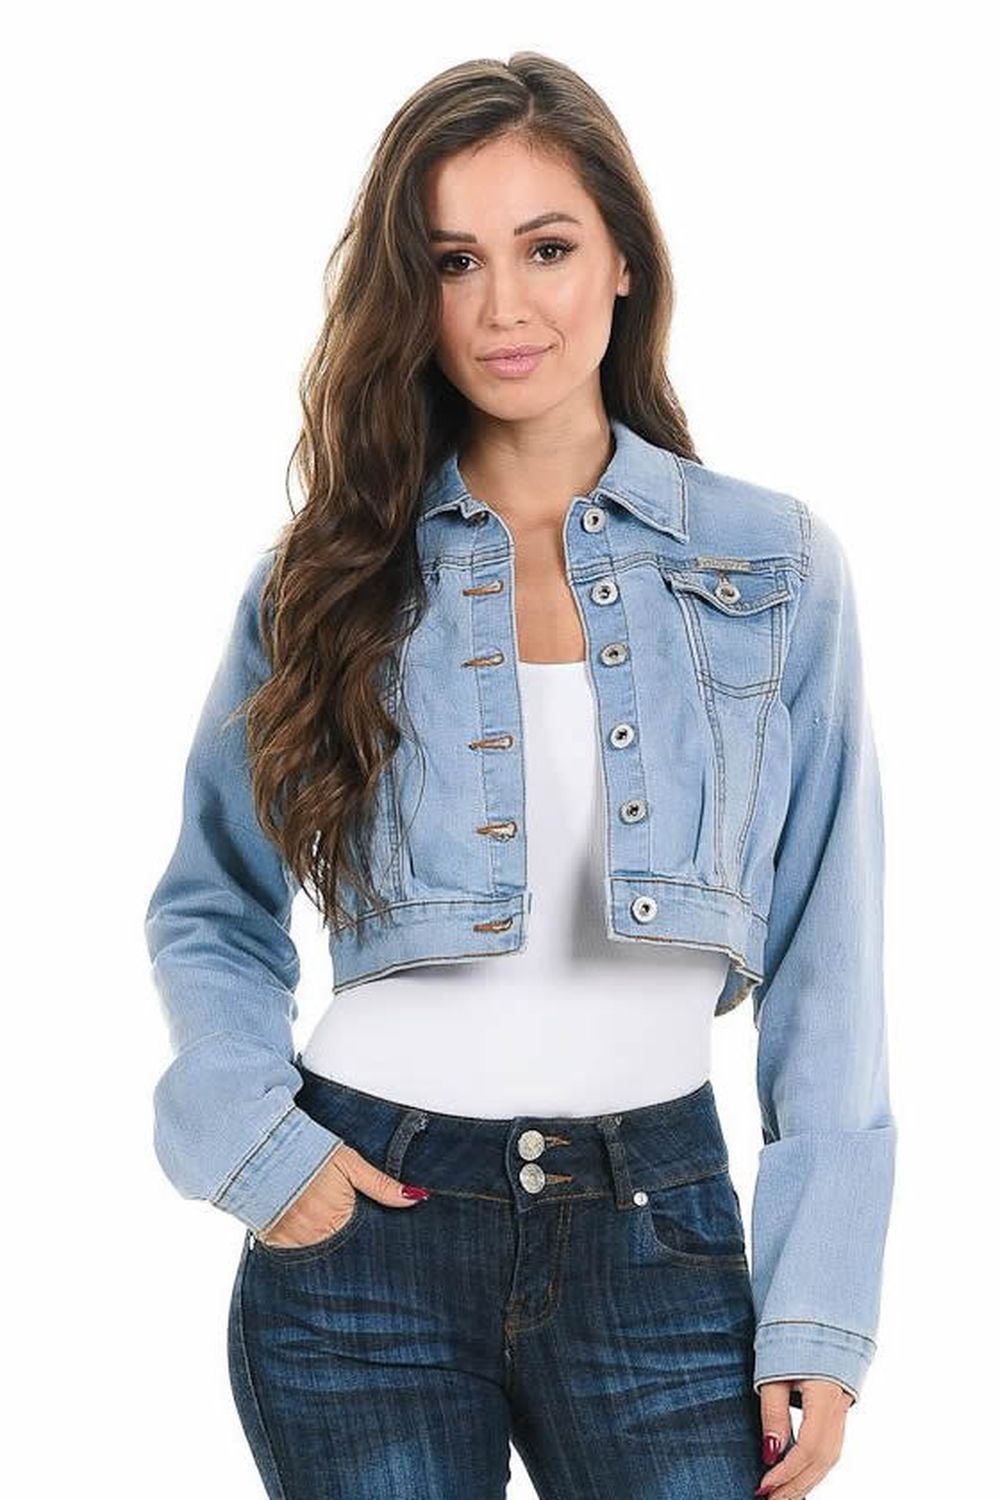 Sweet Look - Sweet Look Women's Denim Jacket · Style 292 - Walmart.com -  Walmart.com